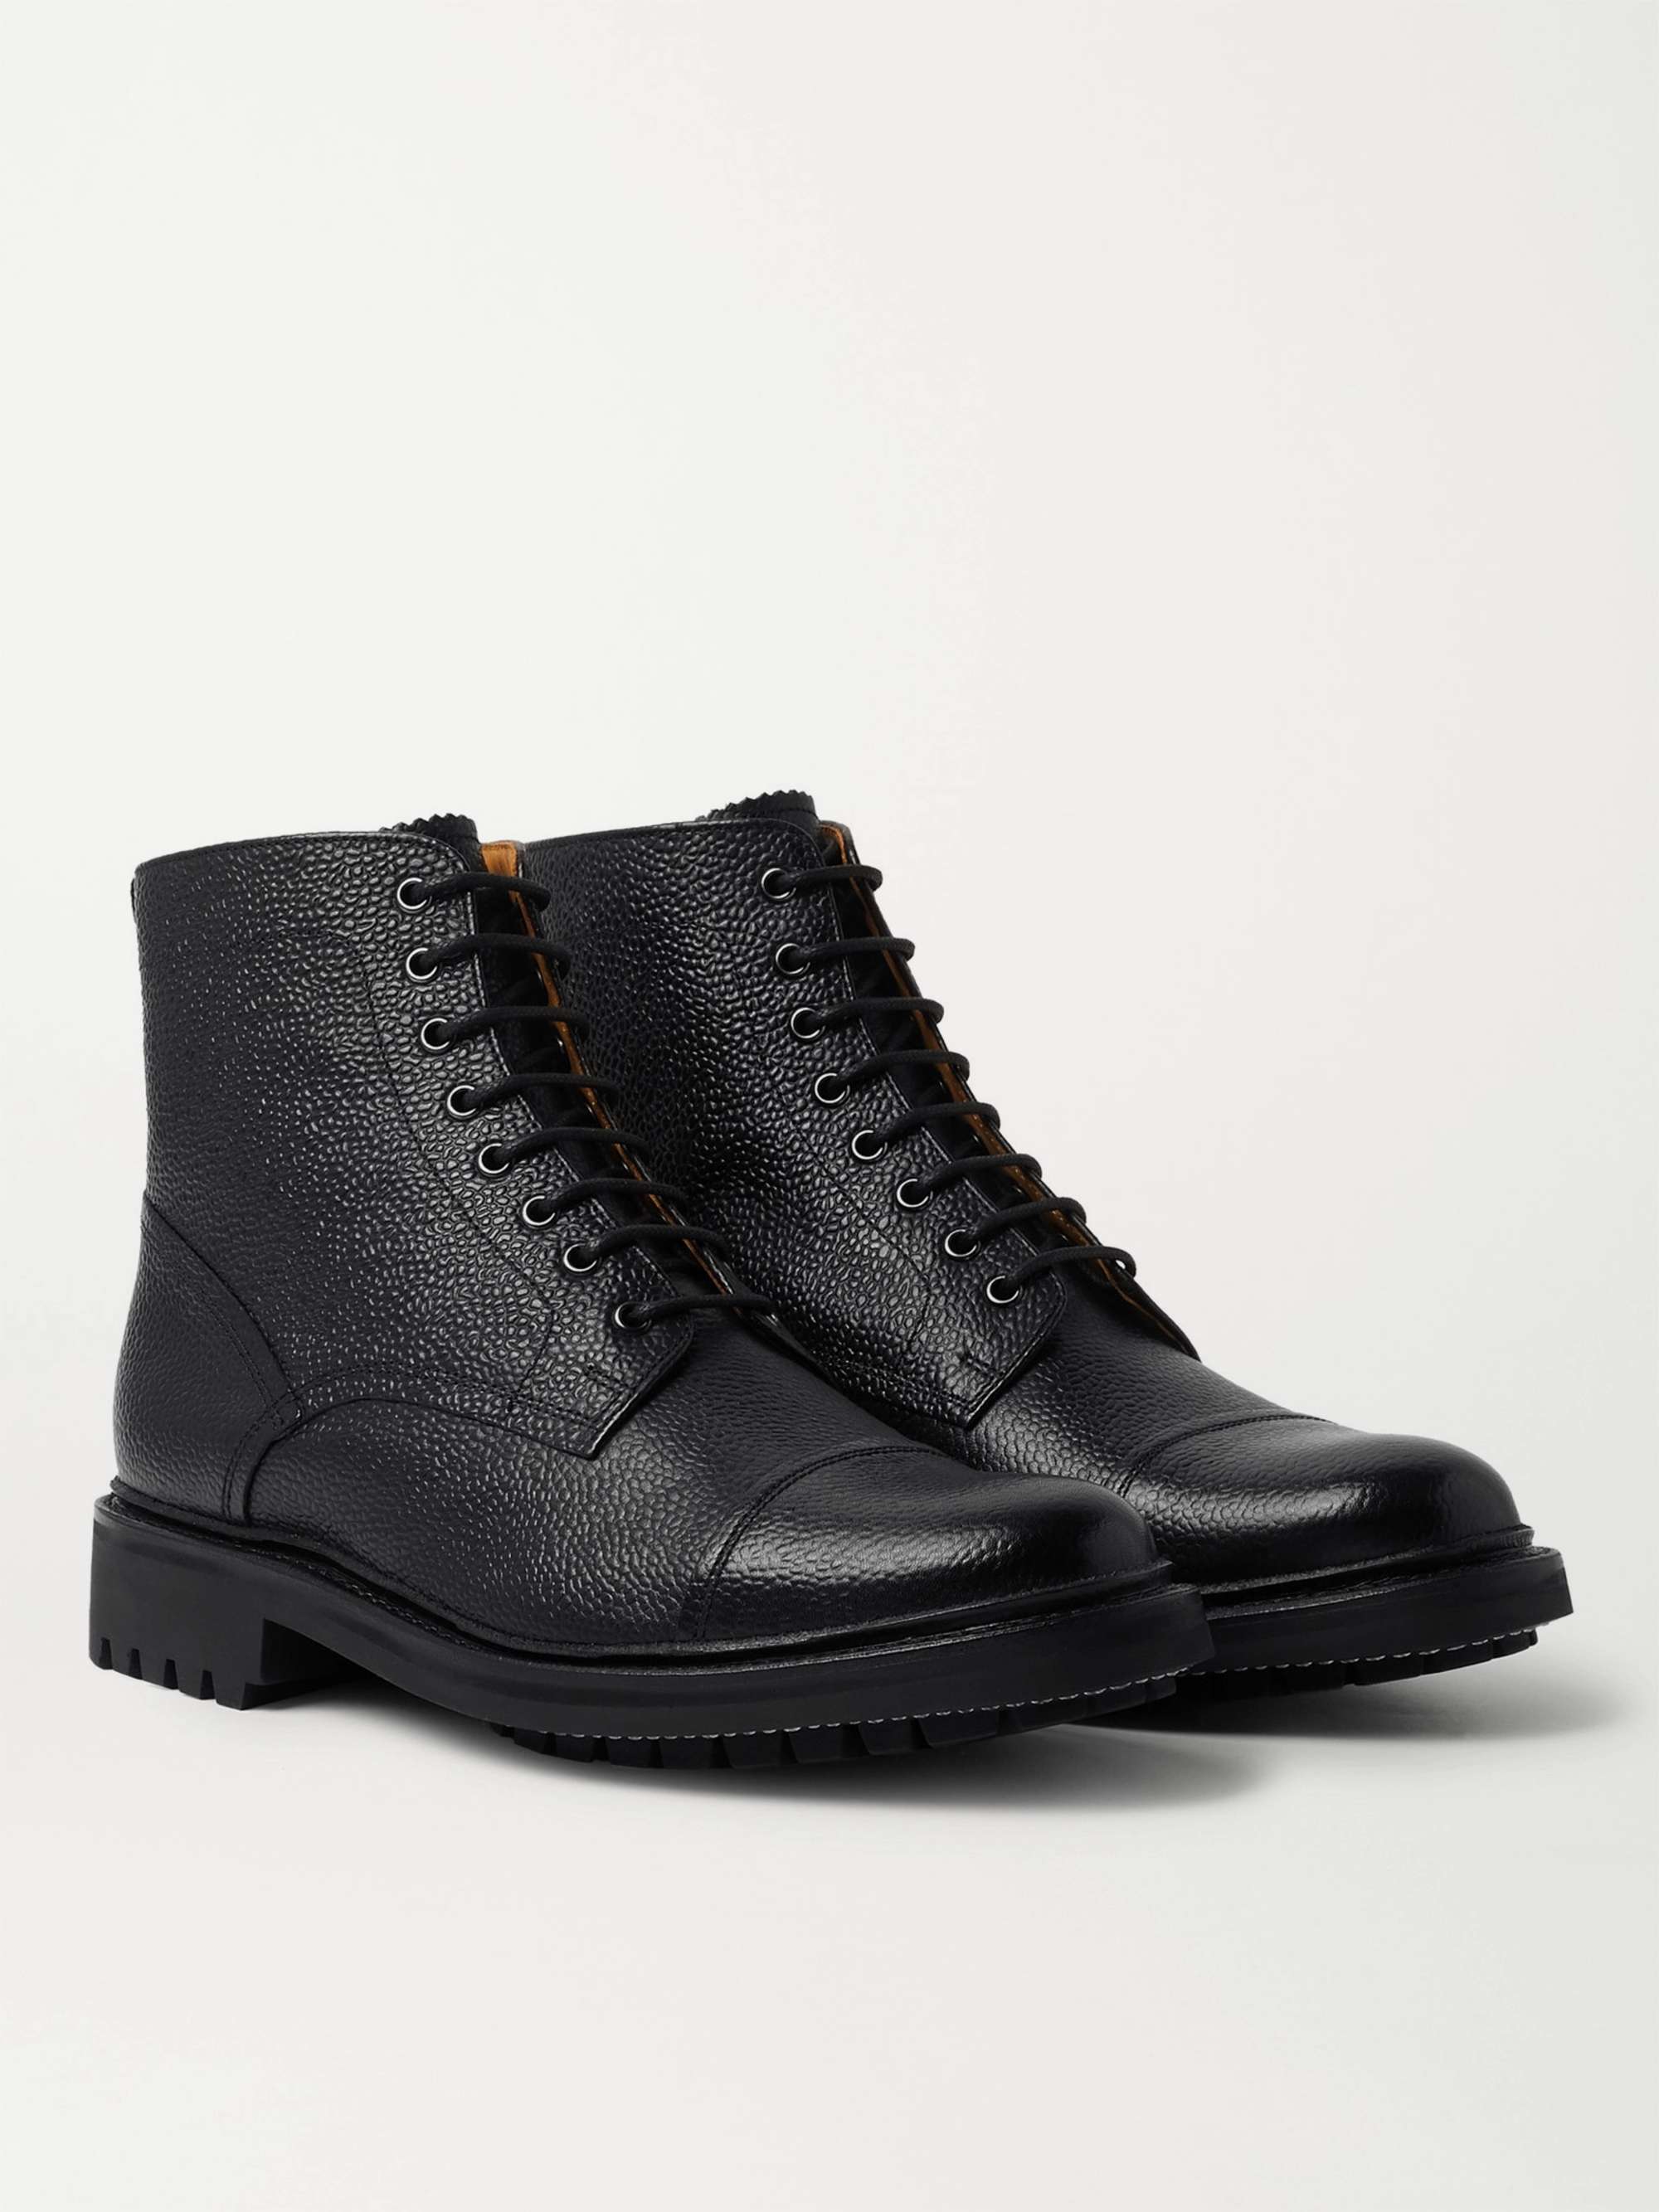 GRENSON Joseph Cap-Toe Pebble-Grain Leather Boots